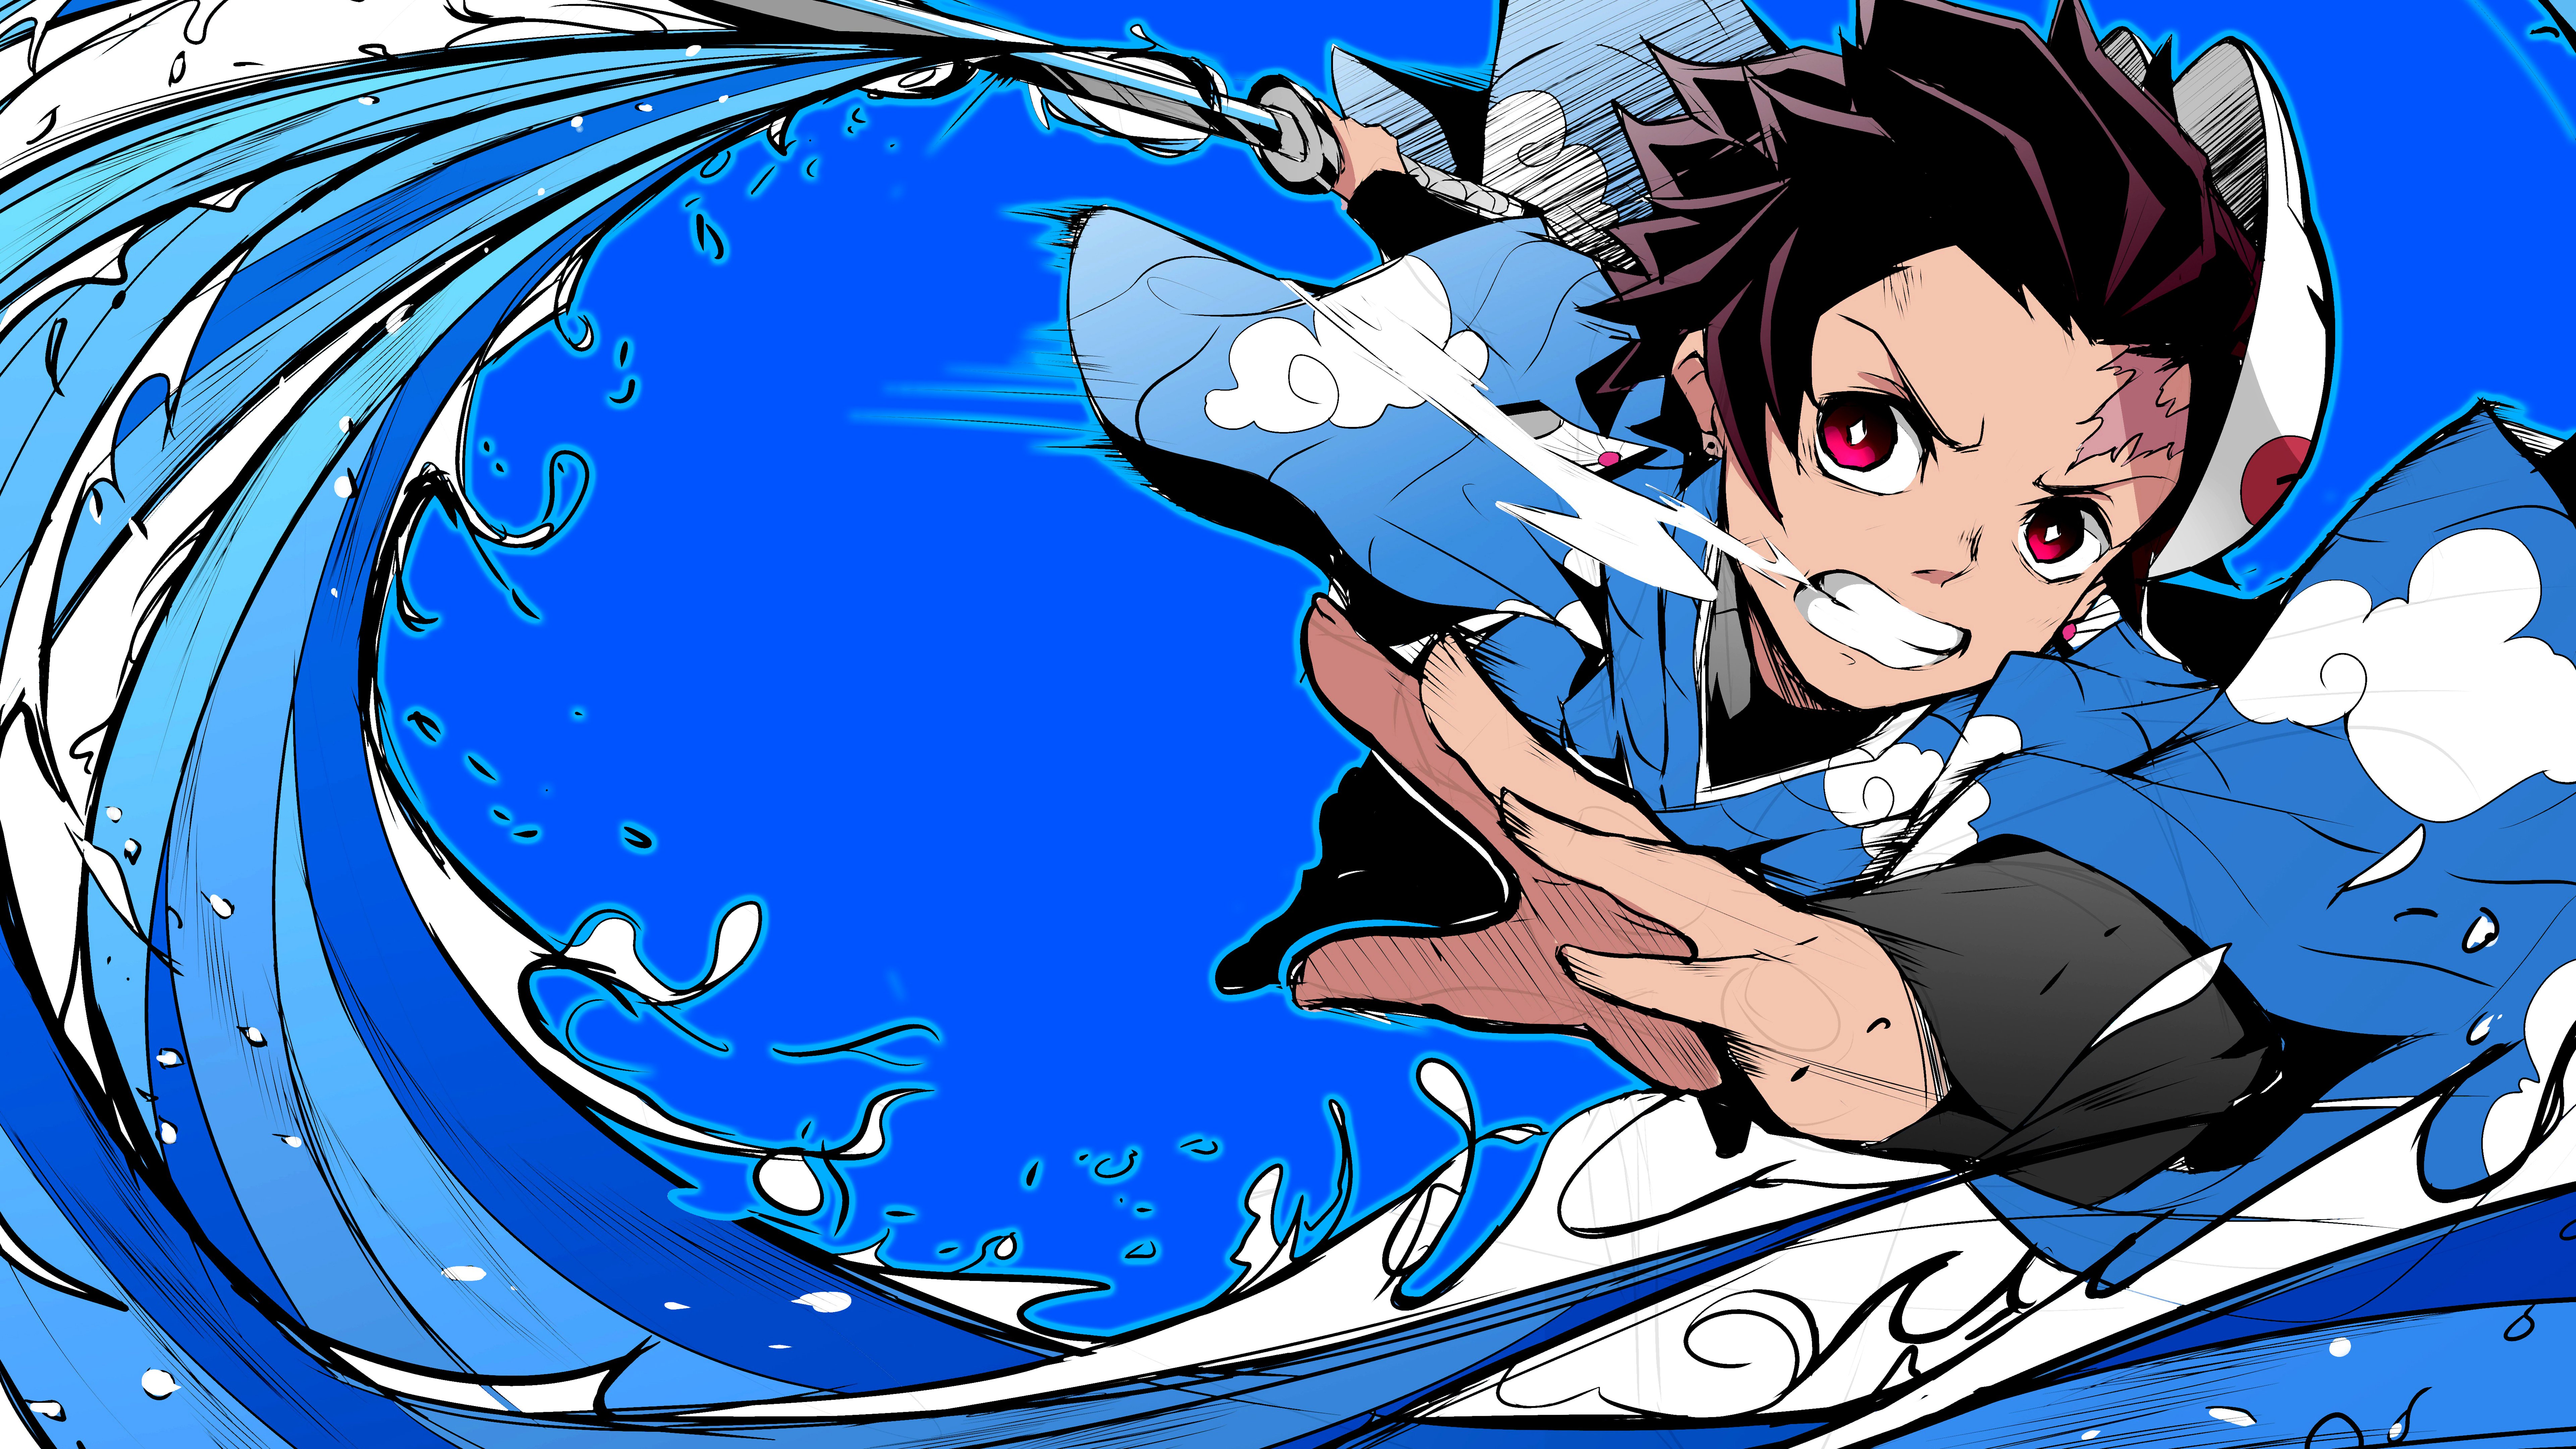 Demon Slayer Tanjiro Kamado With Sword With Blue Backgrounds 4K 8K HD Anime...